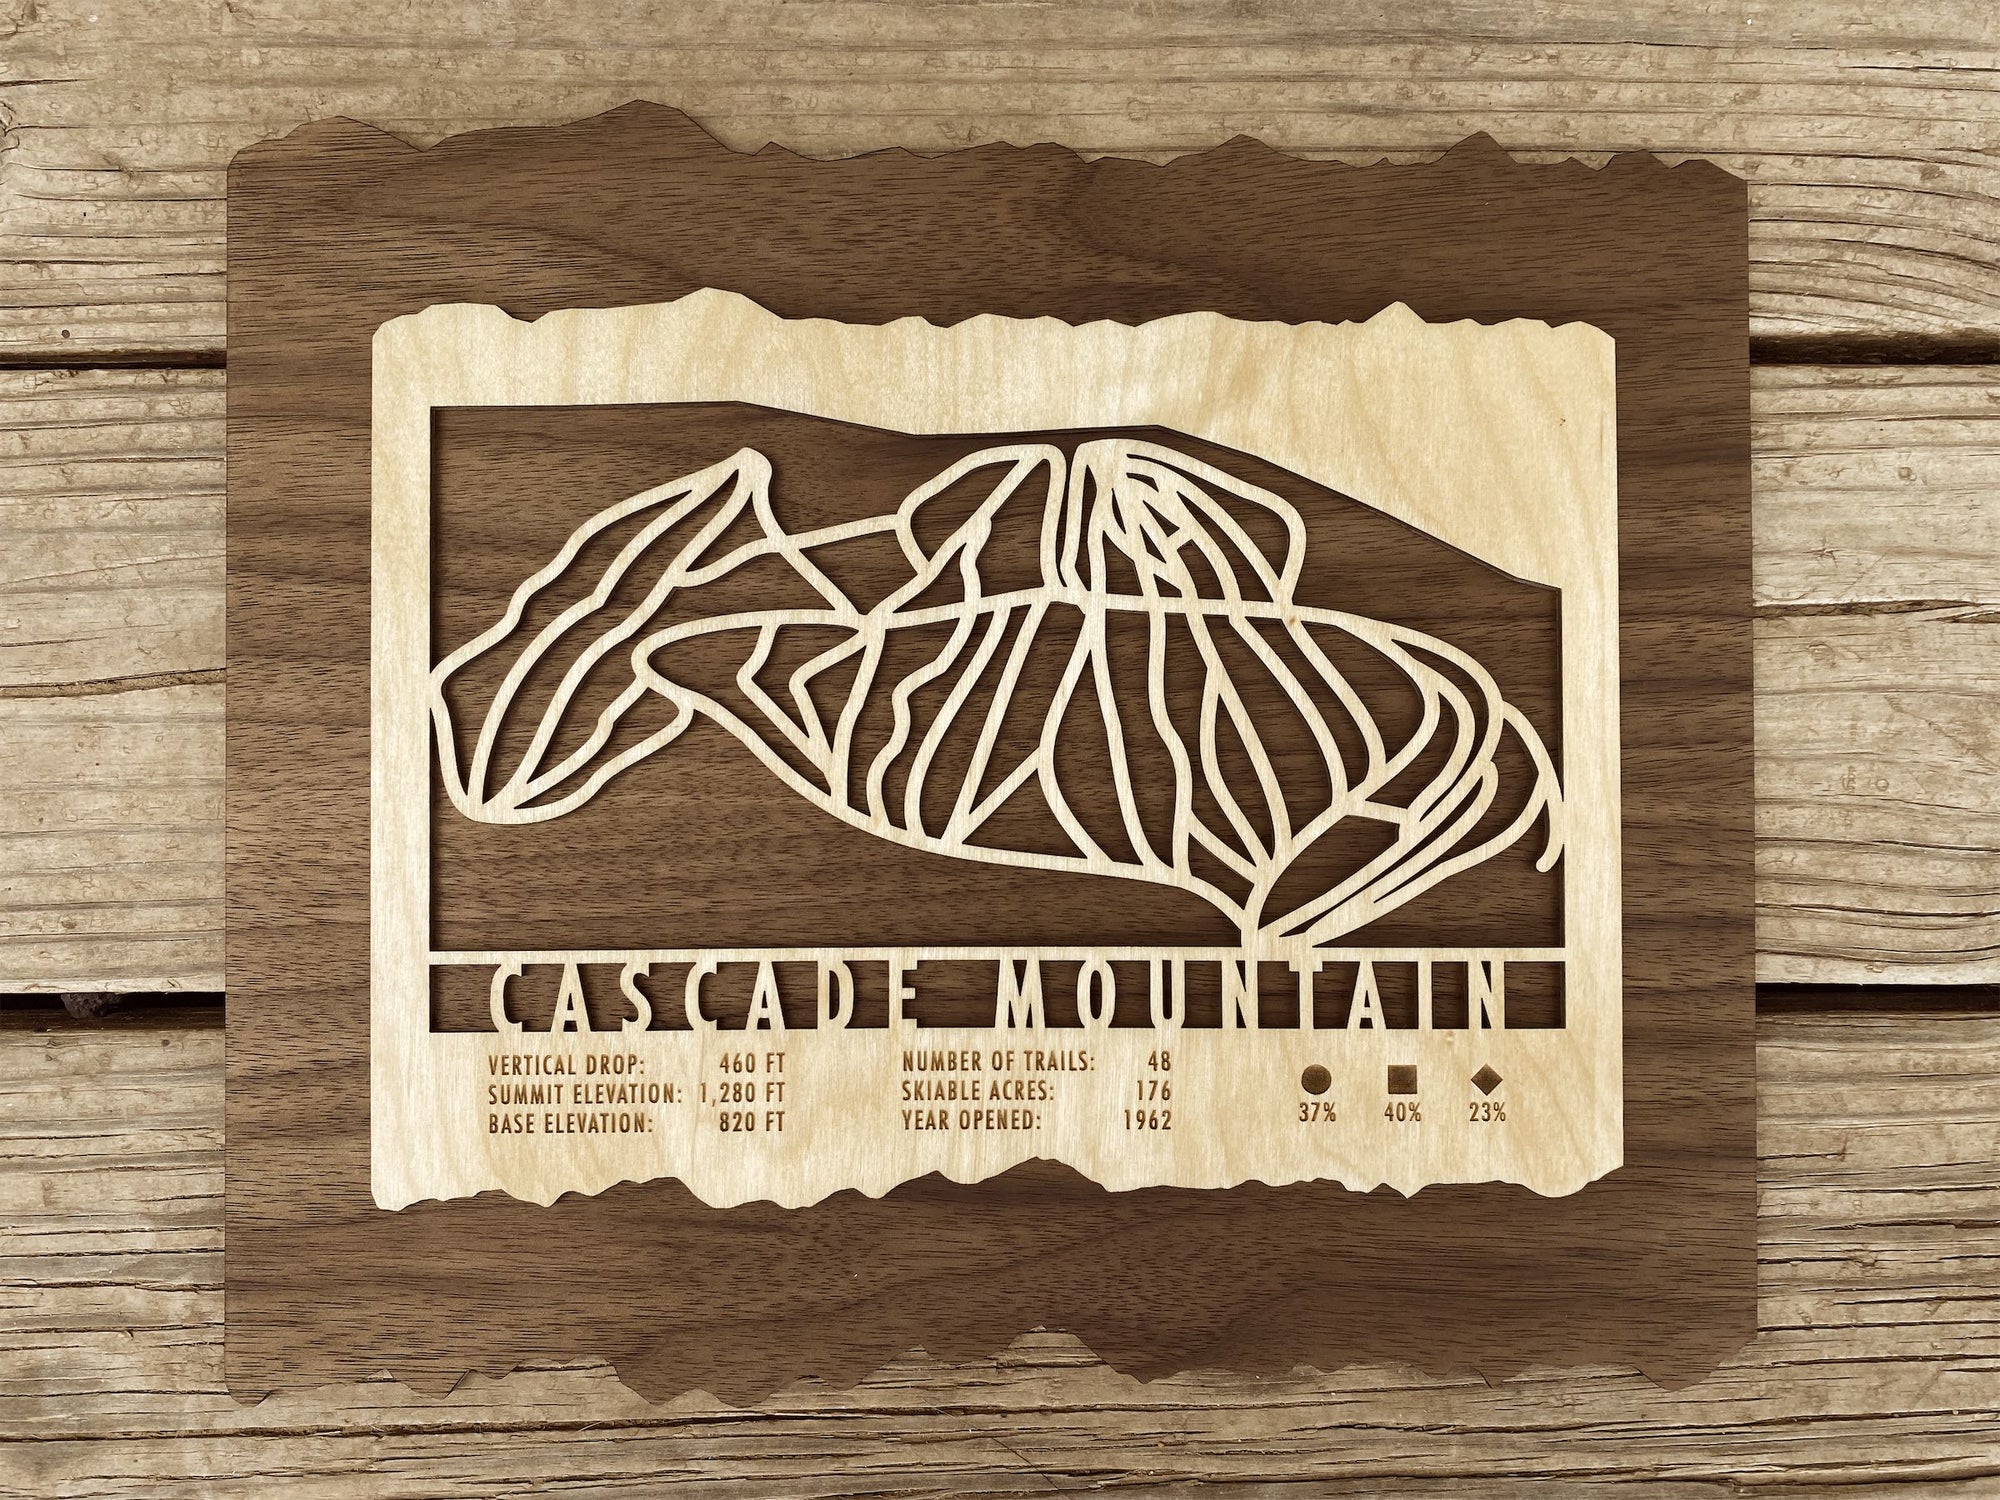 Cascade Mountain Wisconsin Trail Map